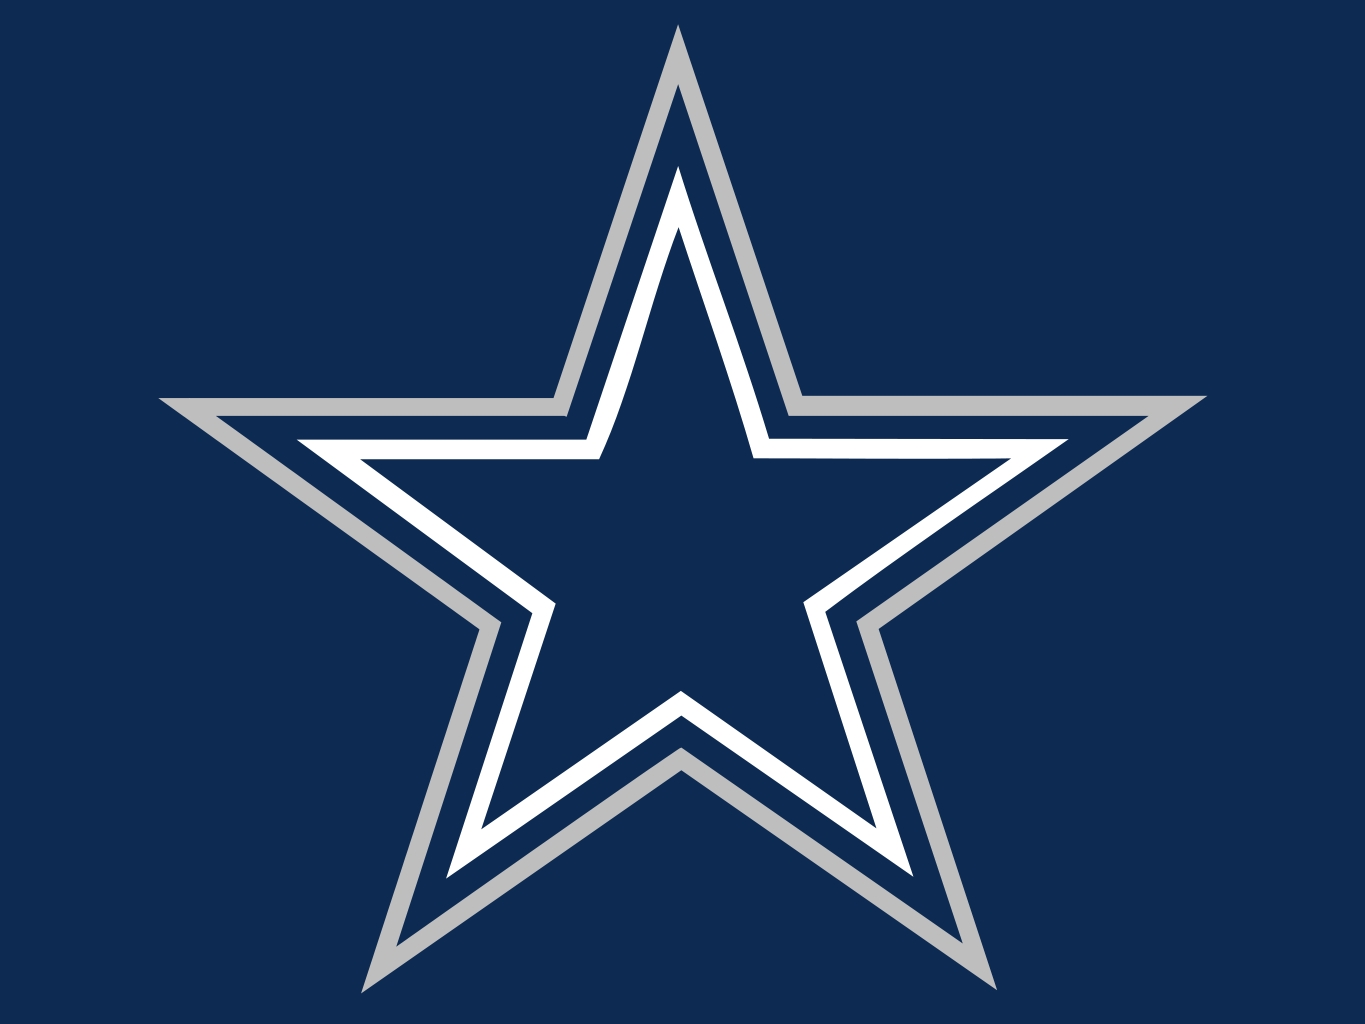 Dallas Cowboys Star Logo Pc Android iPhone And iPad Wallpaper